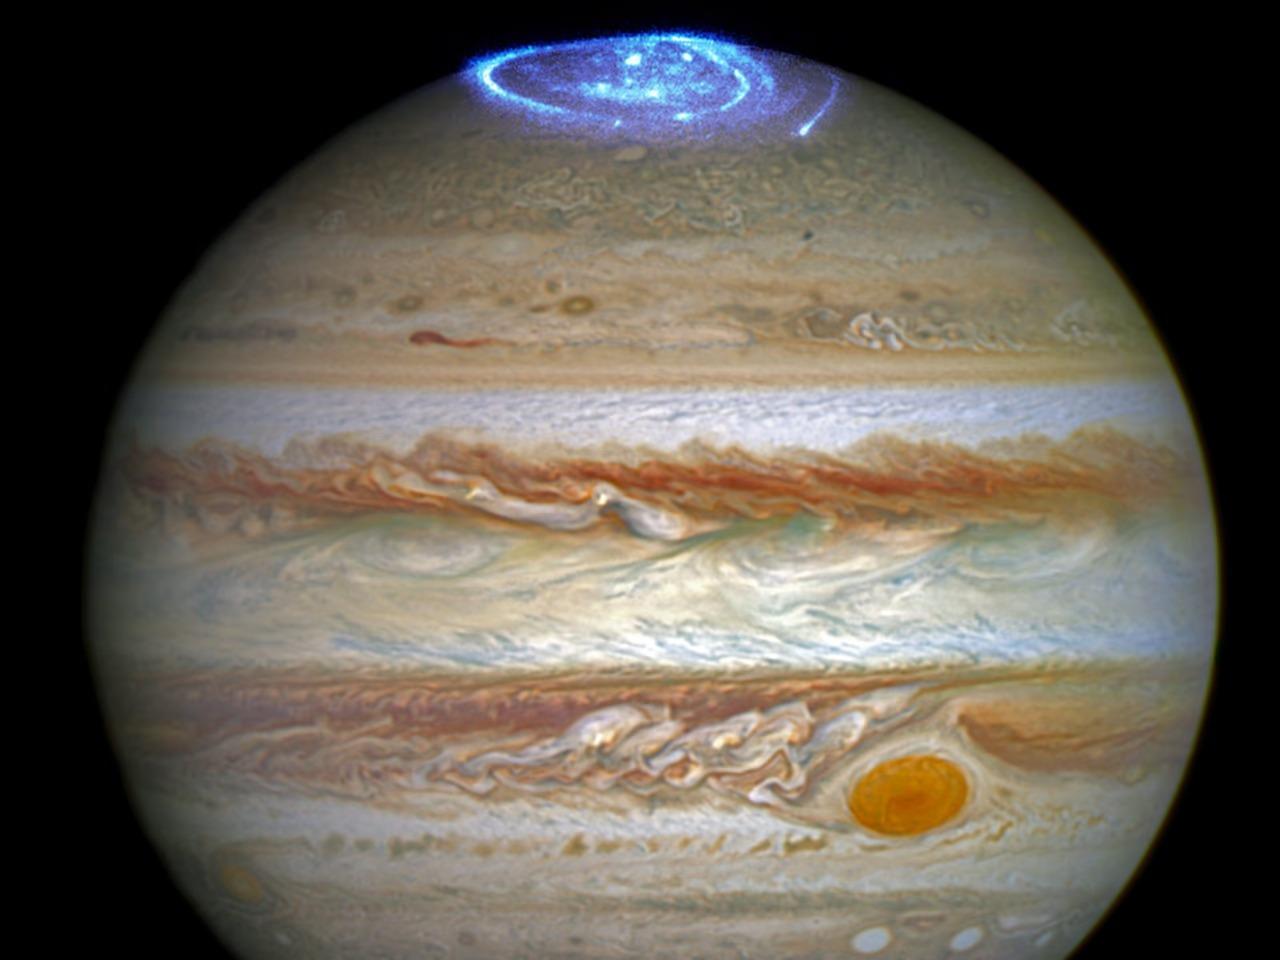 5e5468d1feeNASAのハッブル宇宙望遠鏡がとらえた木星のオーロラ。同望遠鏡による2度の観測データを合成23d106f5a57c3